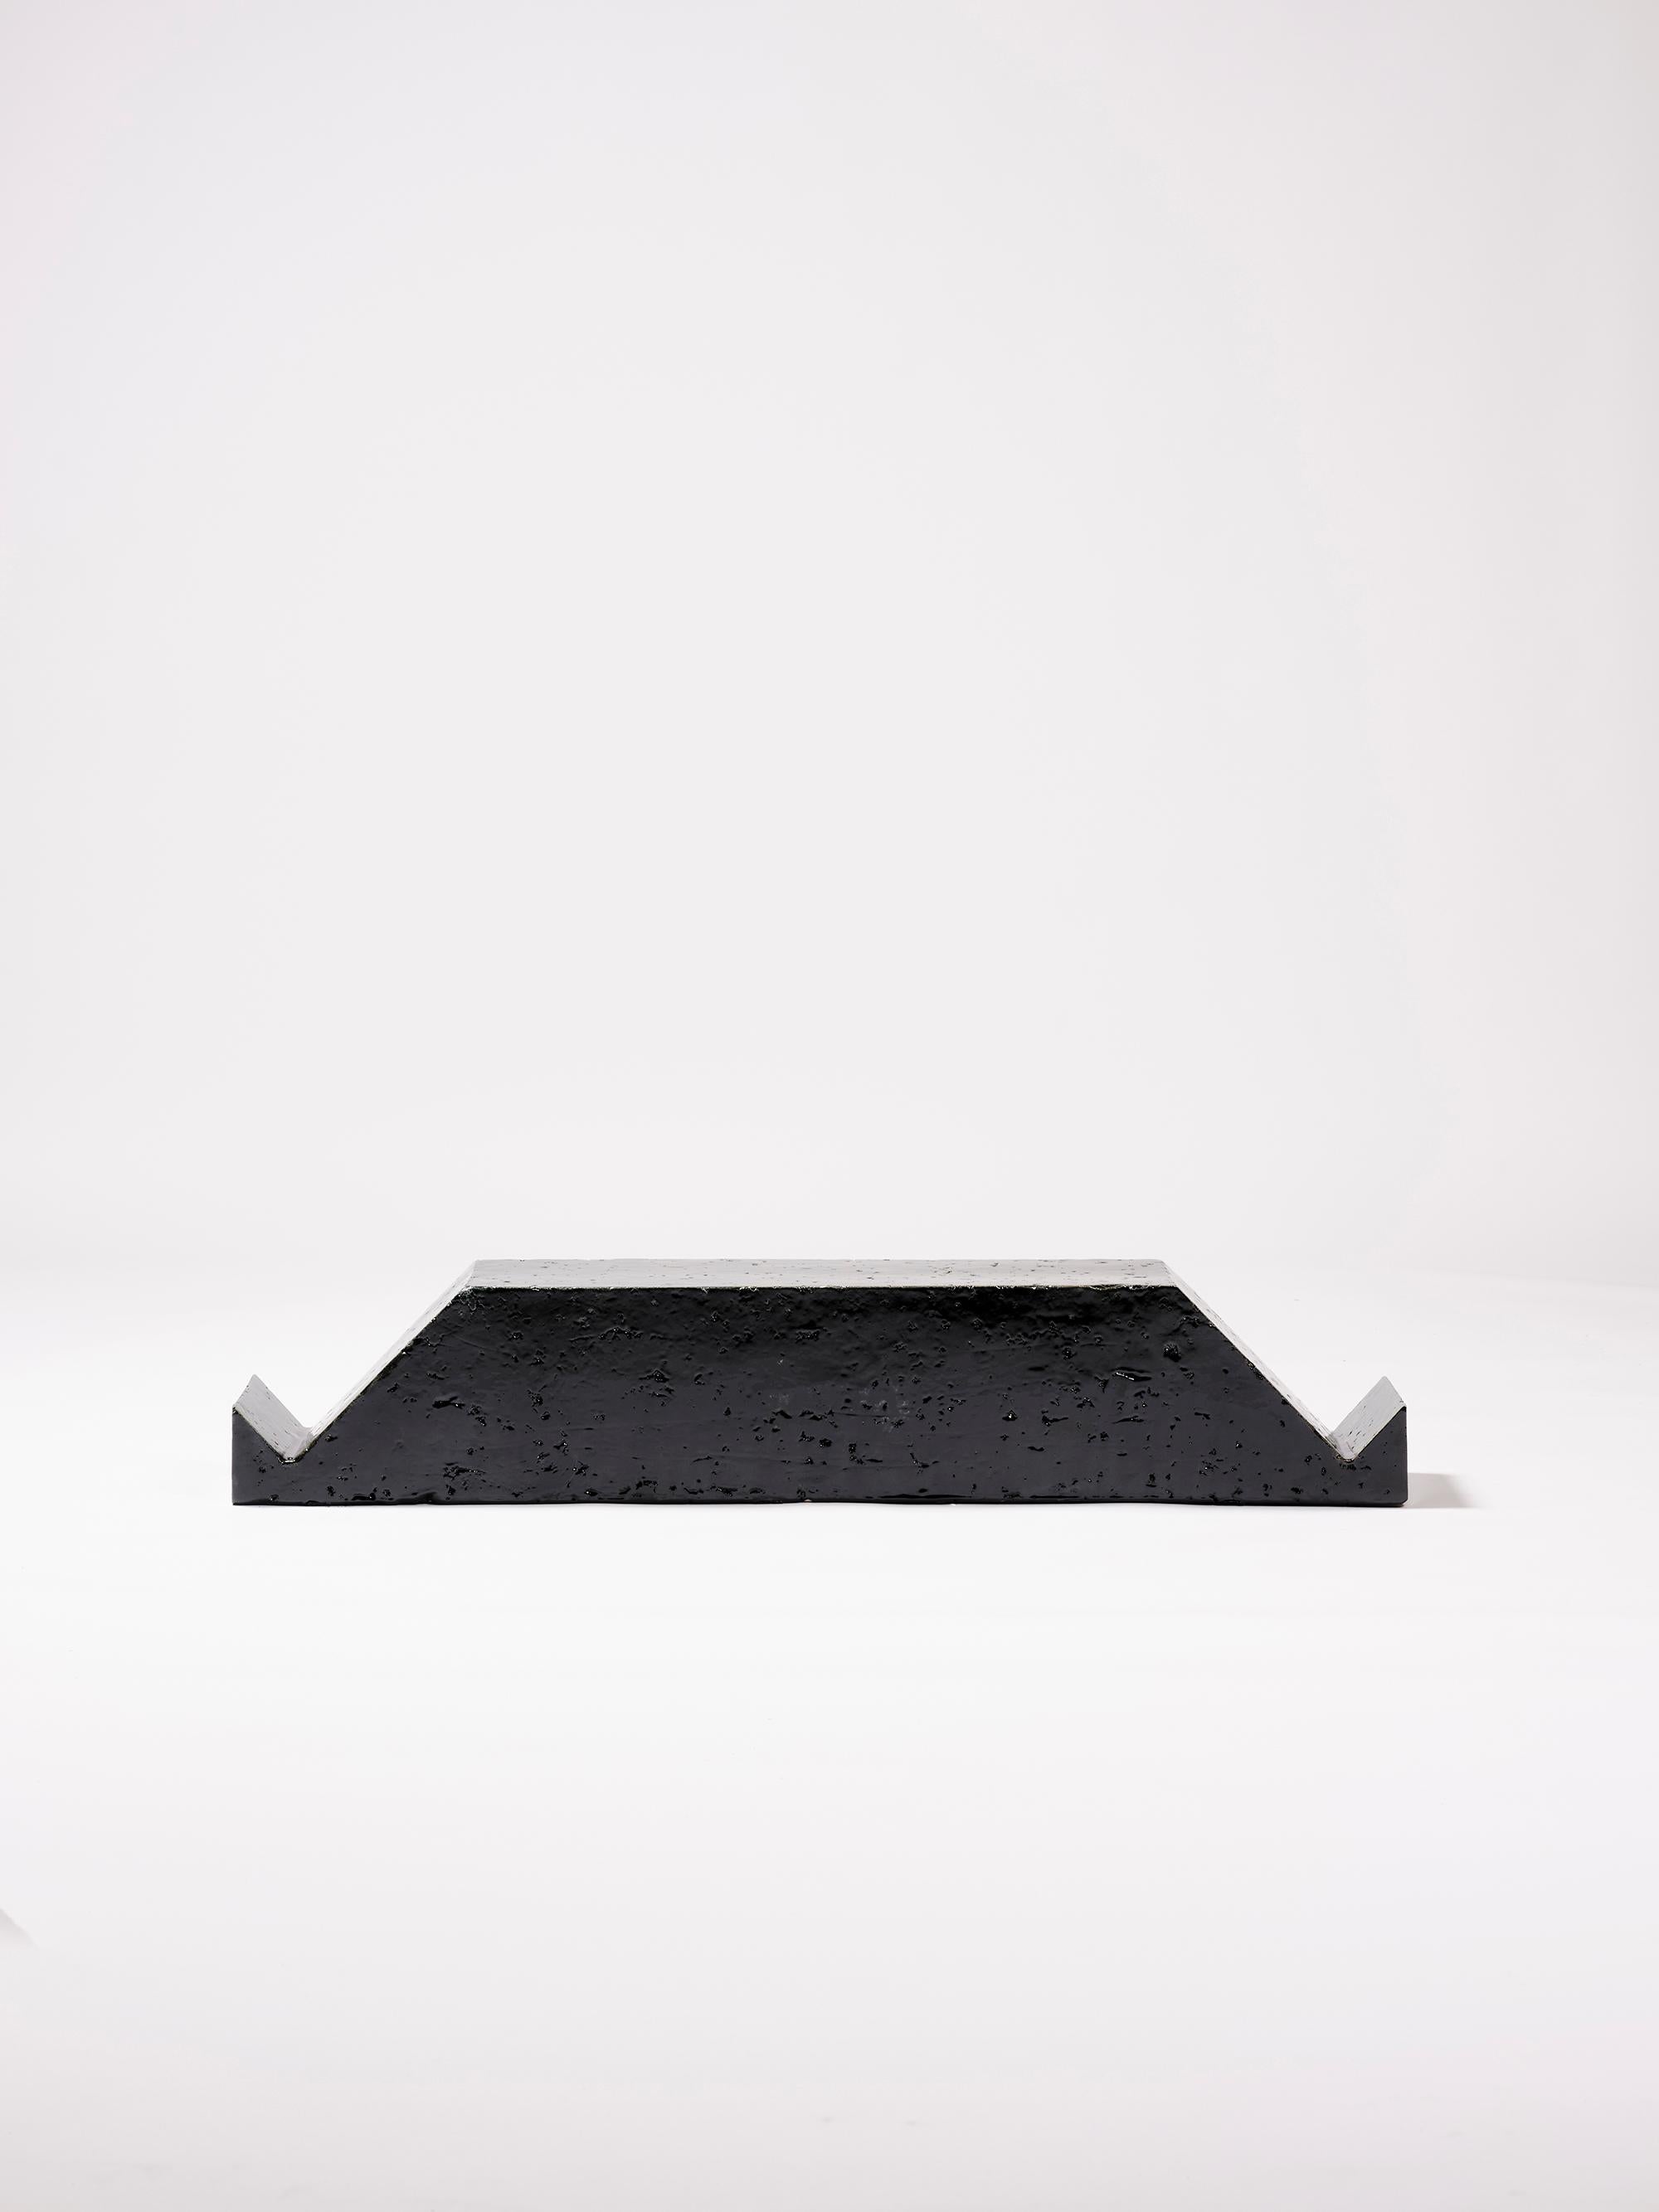 Spanish Contemporary Ceramic Table Lectern Reading Desk Glazed Earthenware Deep Black